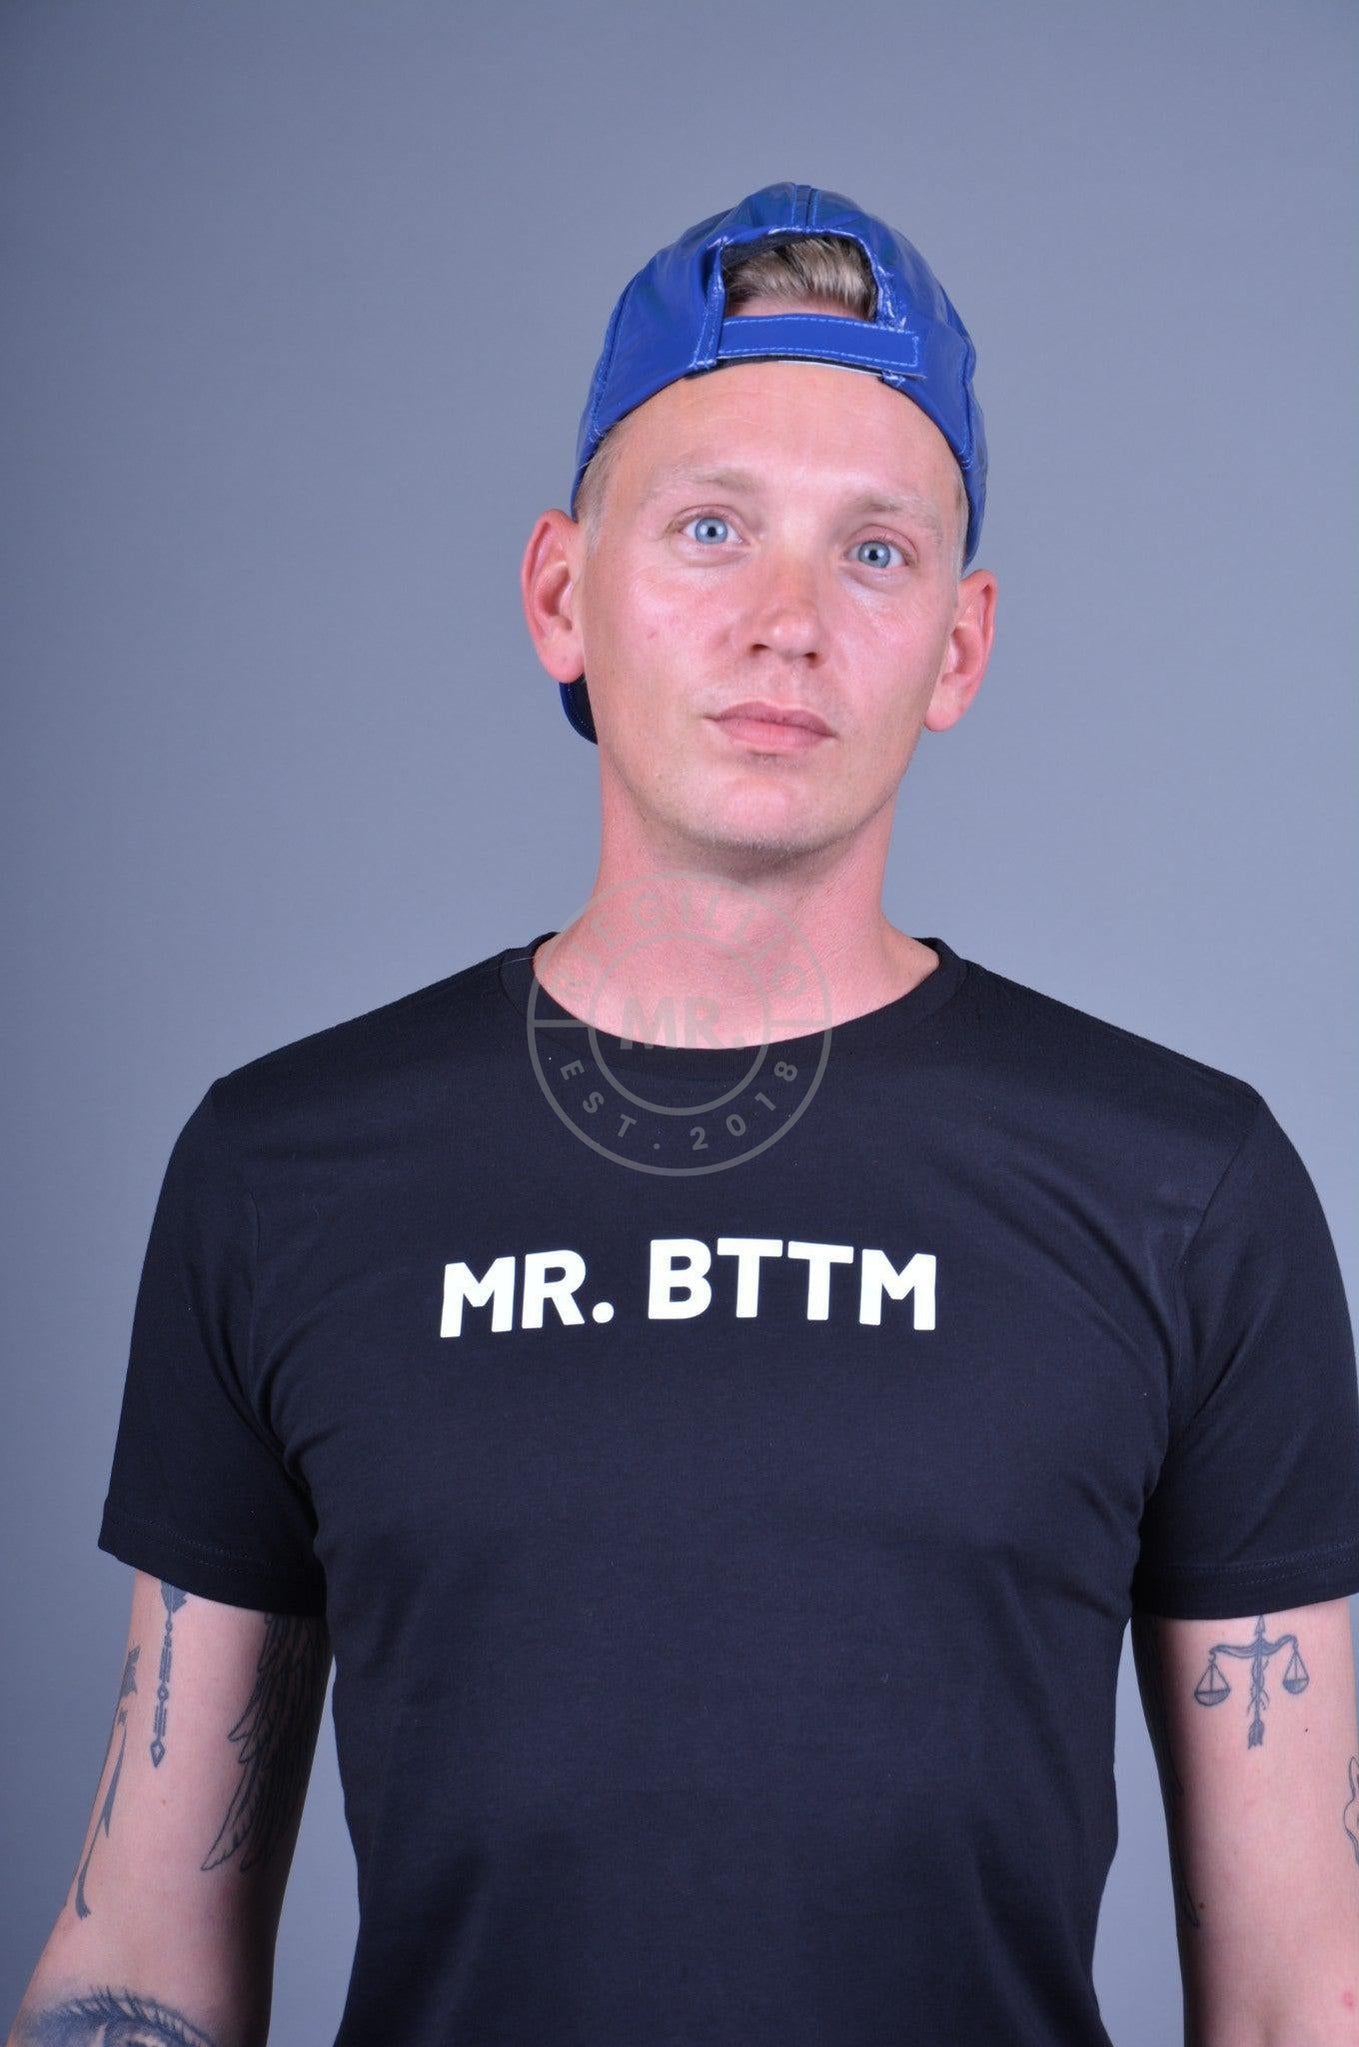 MR. BTTM T-Shirt at MR. Riegillio